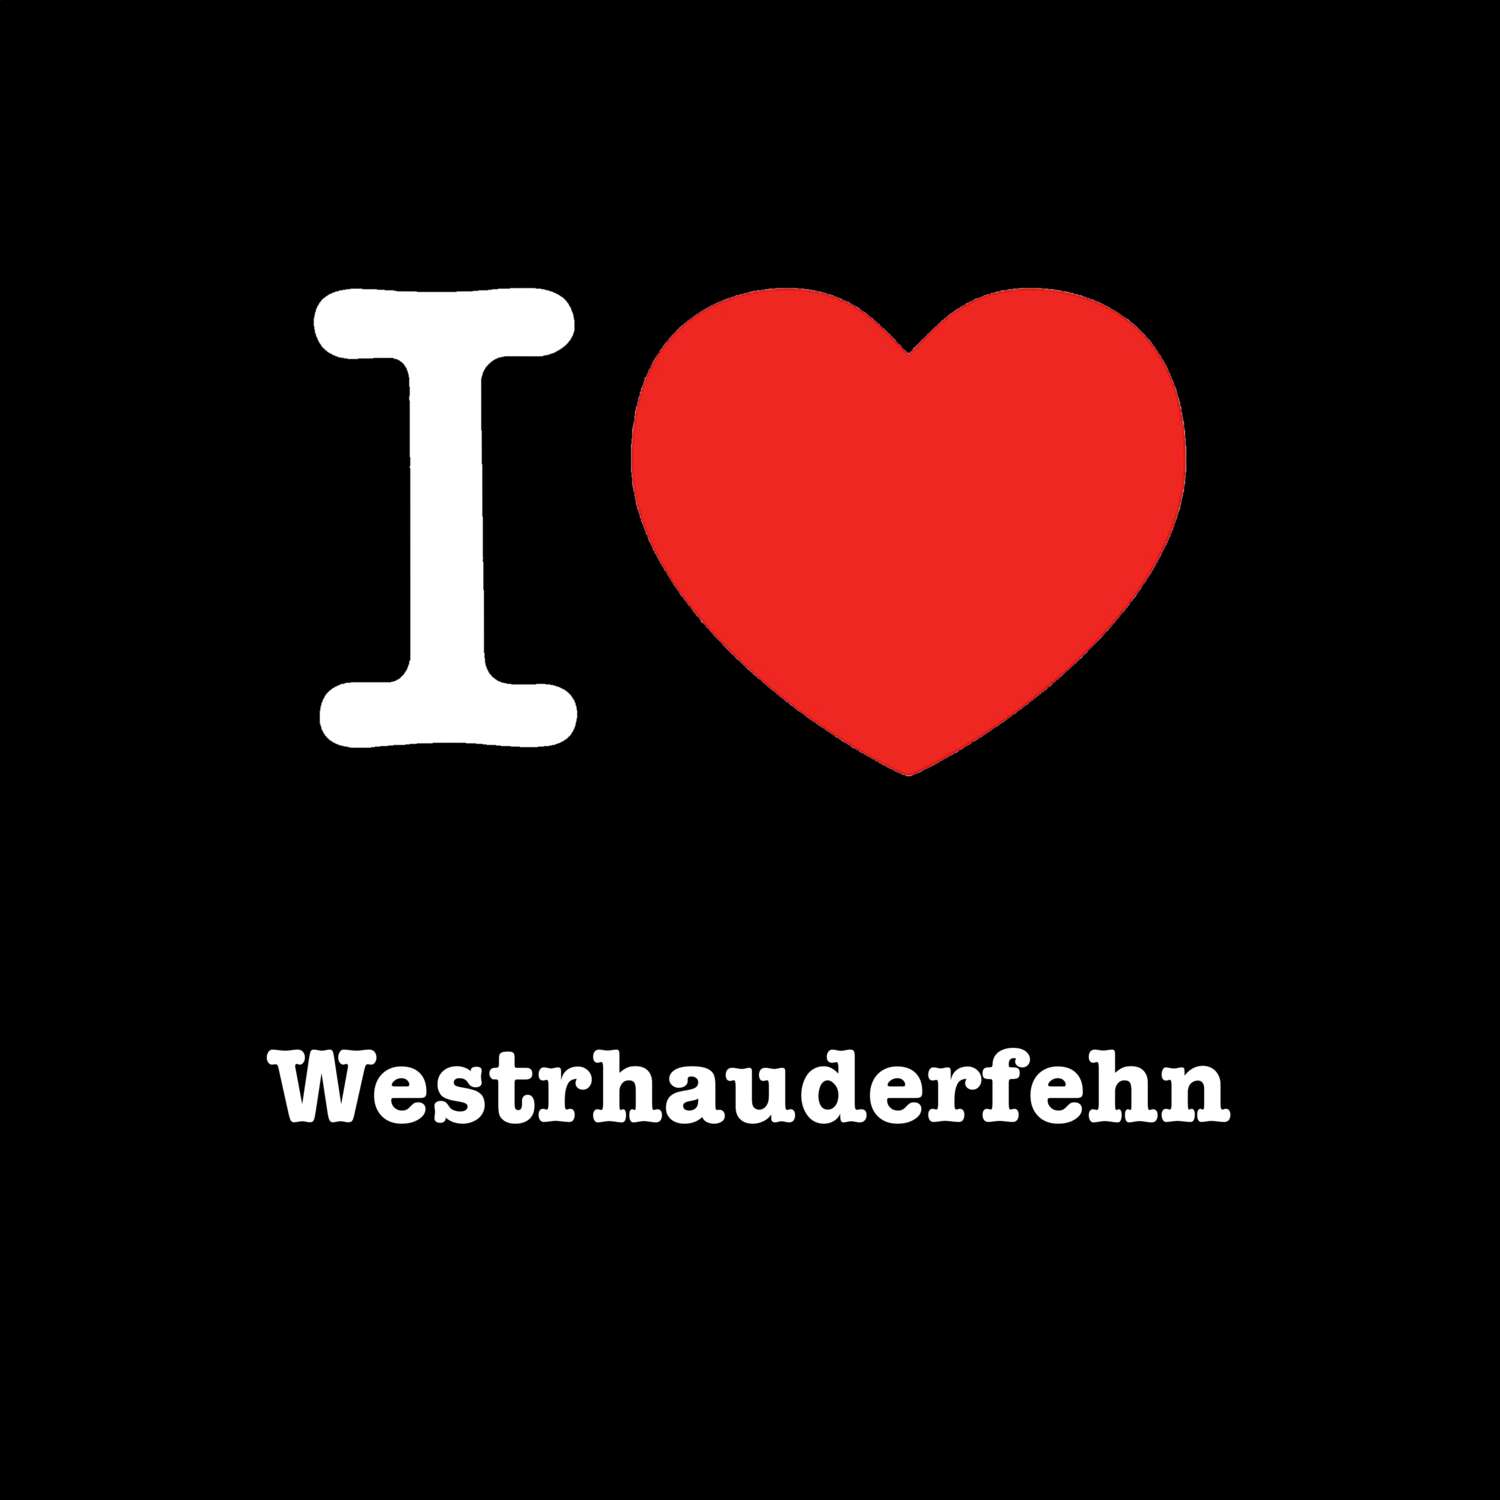 Westrhauderfehn T-Shirt »I love«